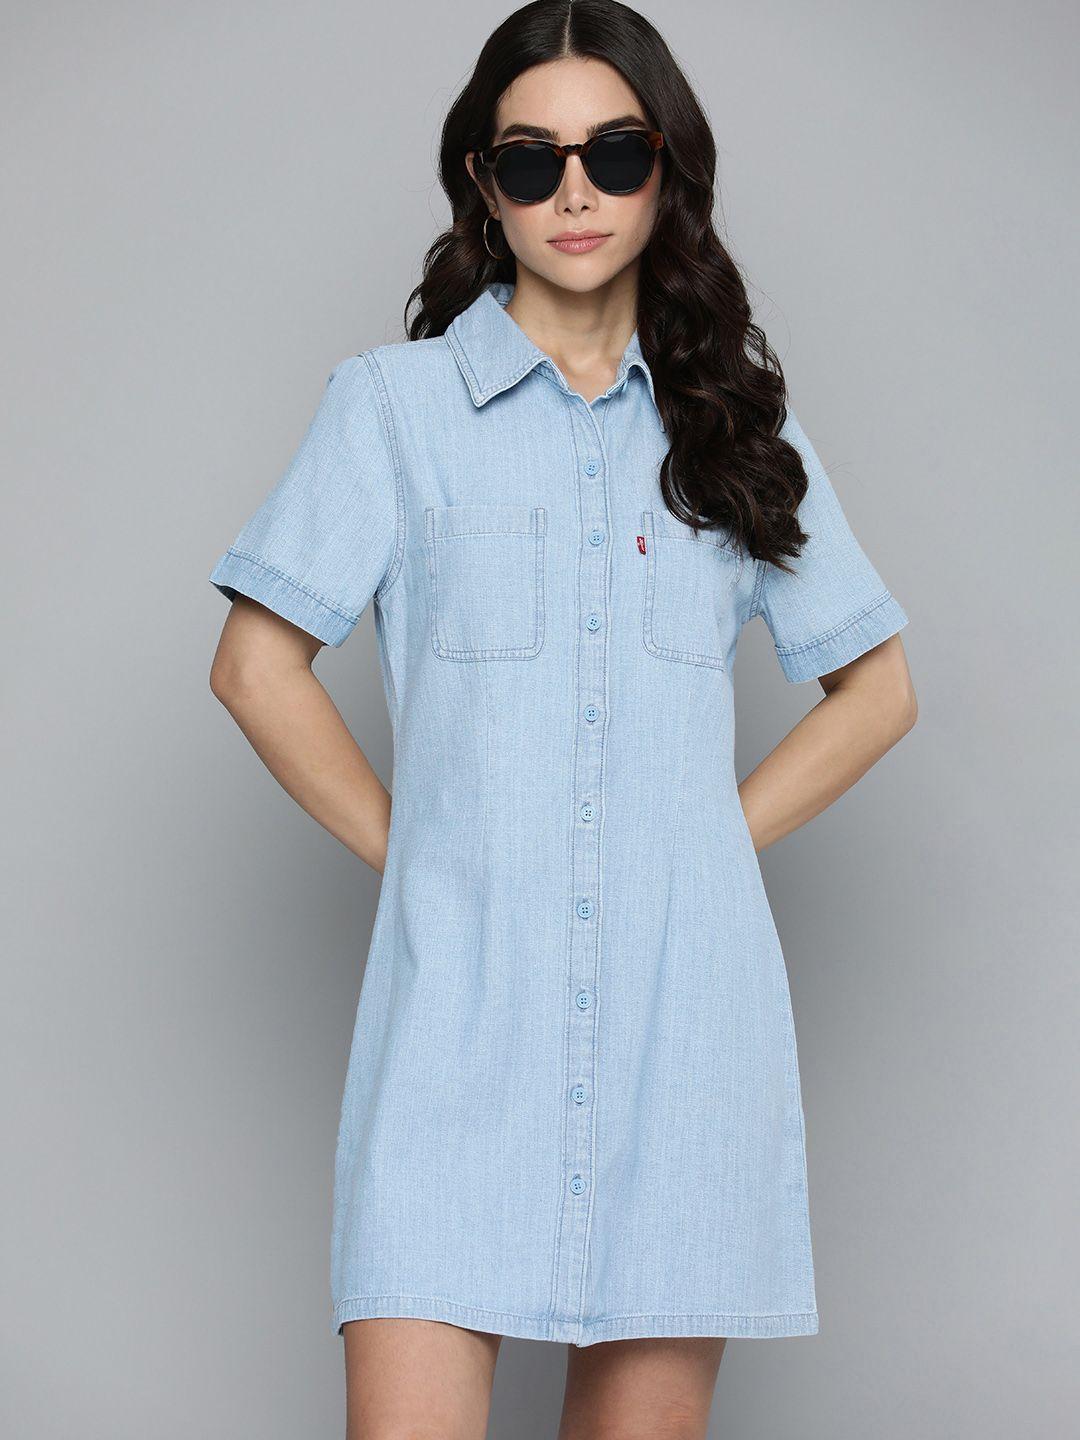 levis-pure-cotton-chambray-shirt-style-dress